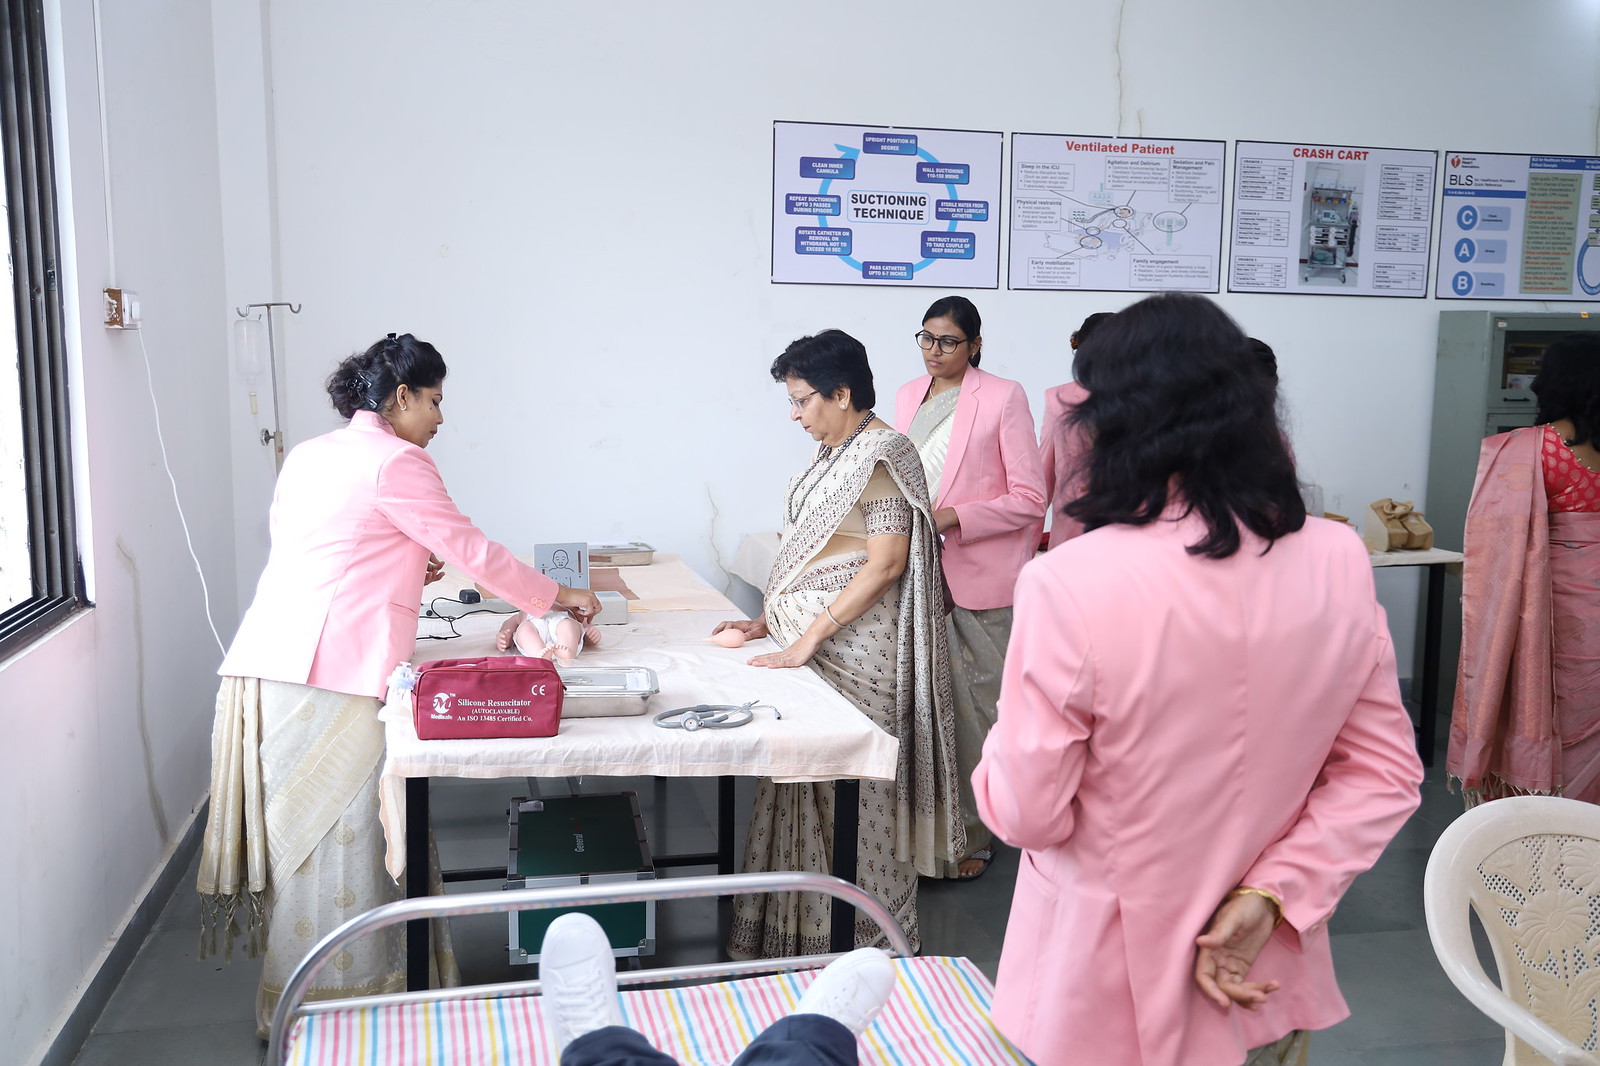 Practice Nursing For Women's